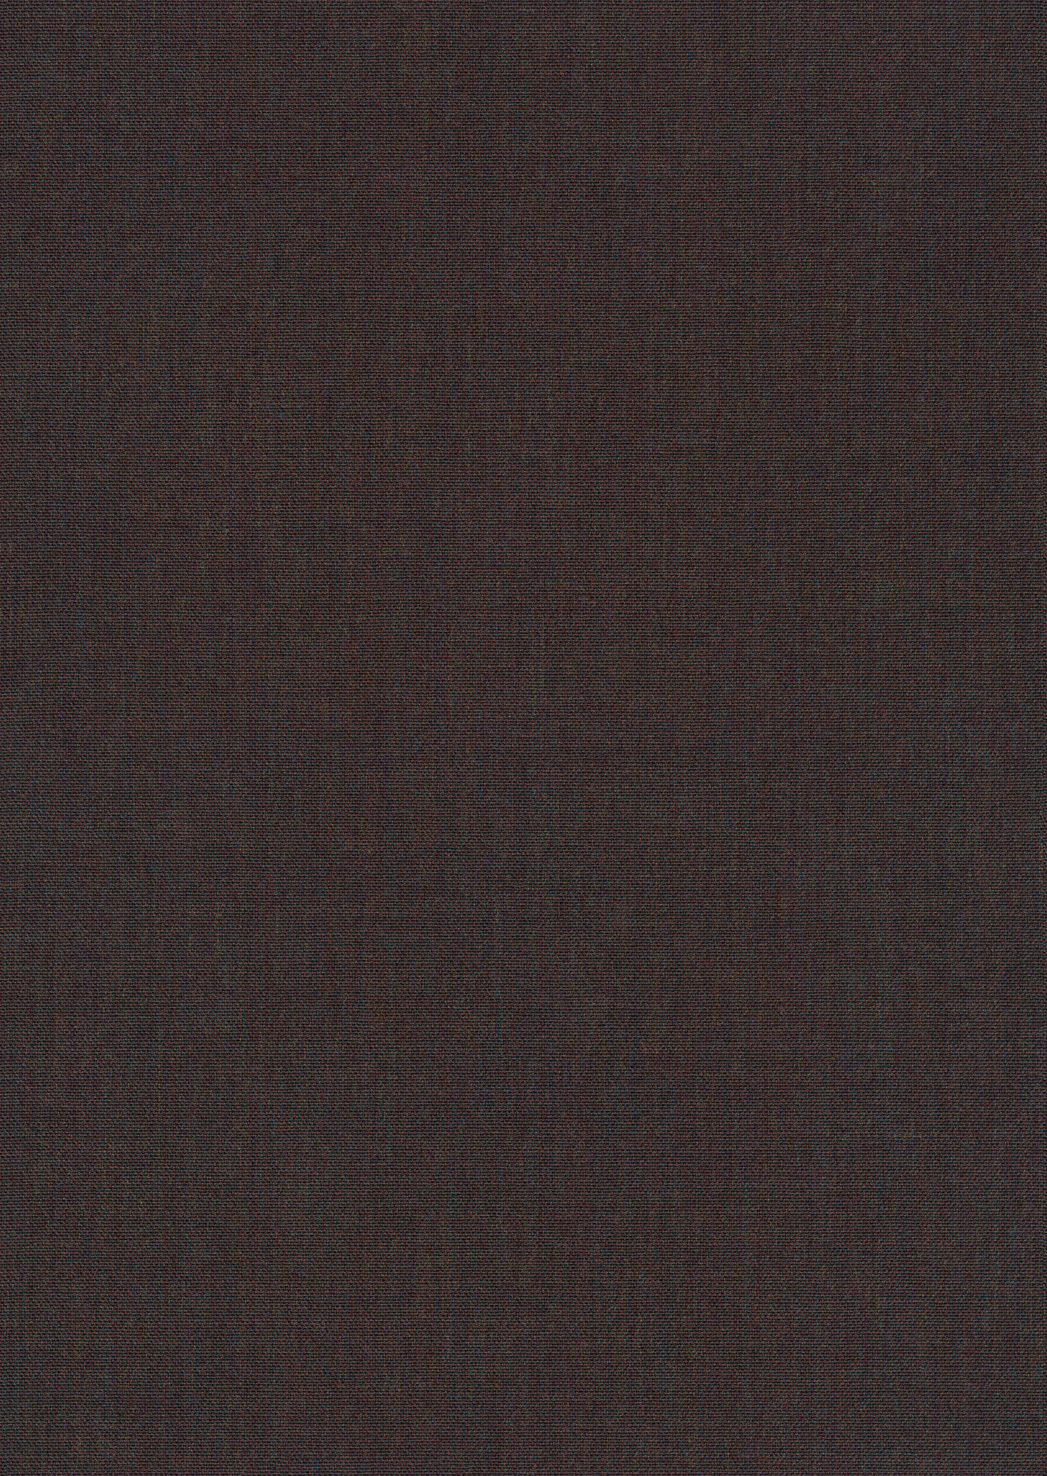 Fabric sample Remix 3 362 brown